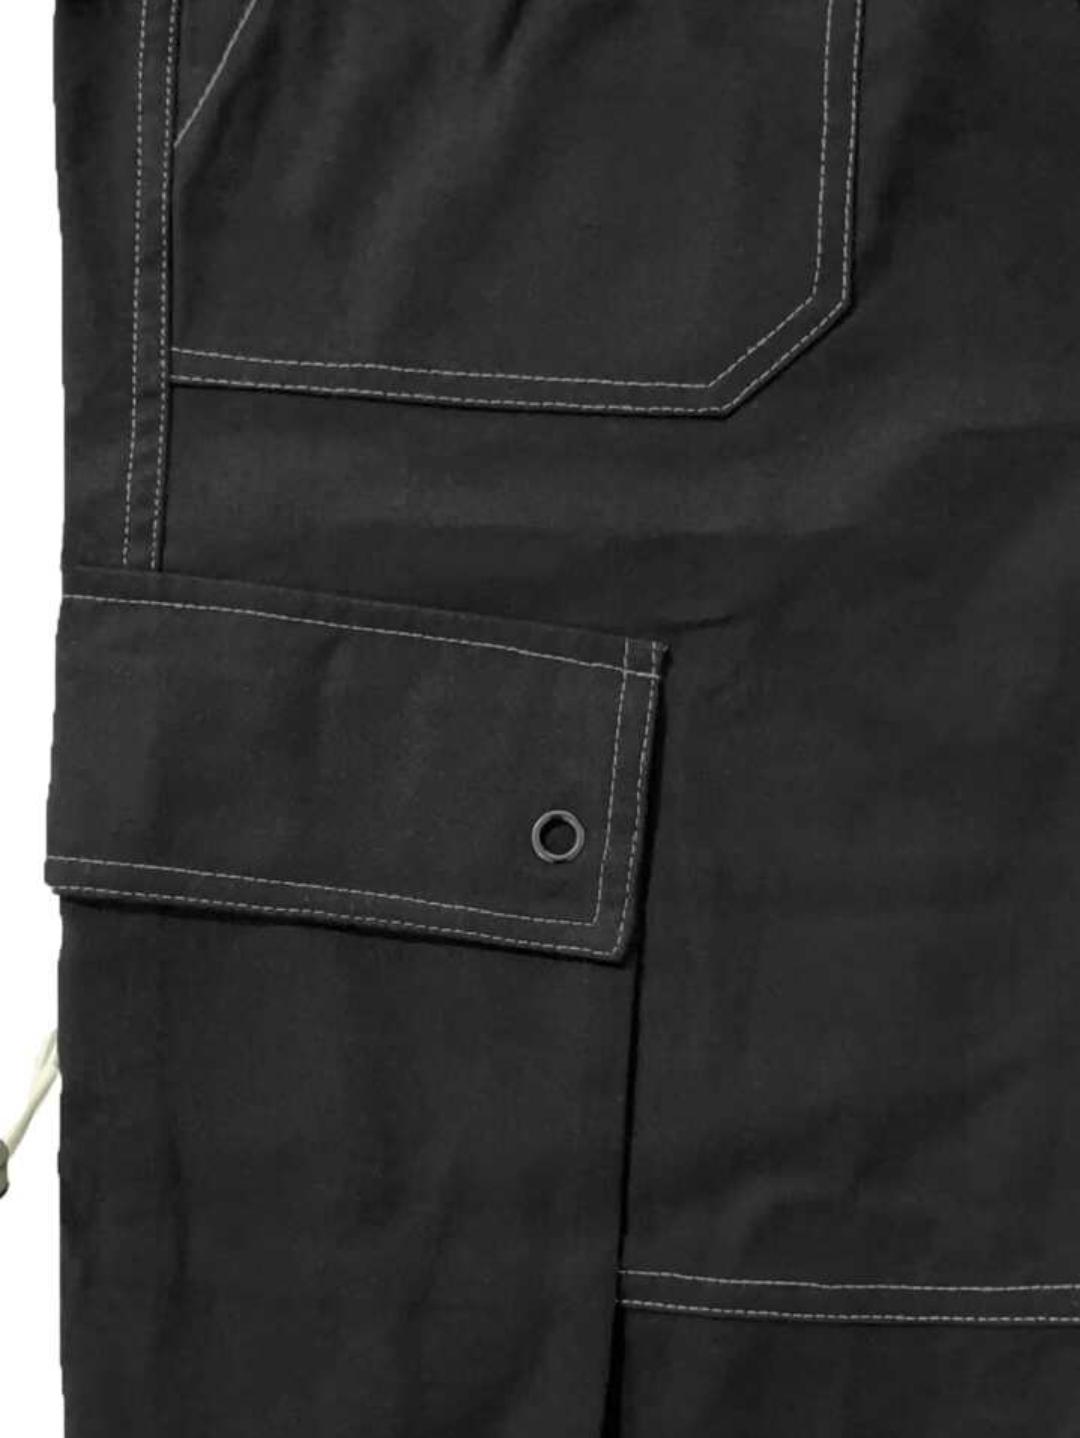 Hypemode Men Top-stitching Slant Pocket Cargo Pants